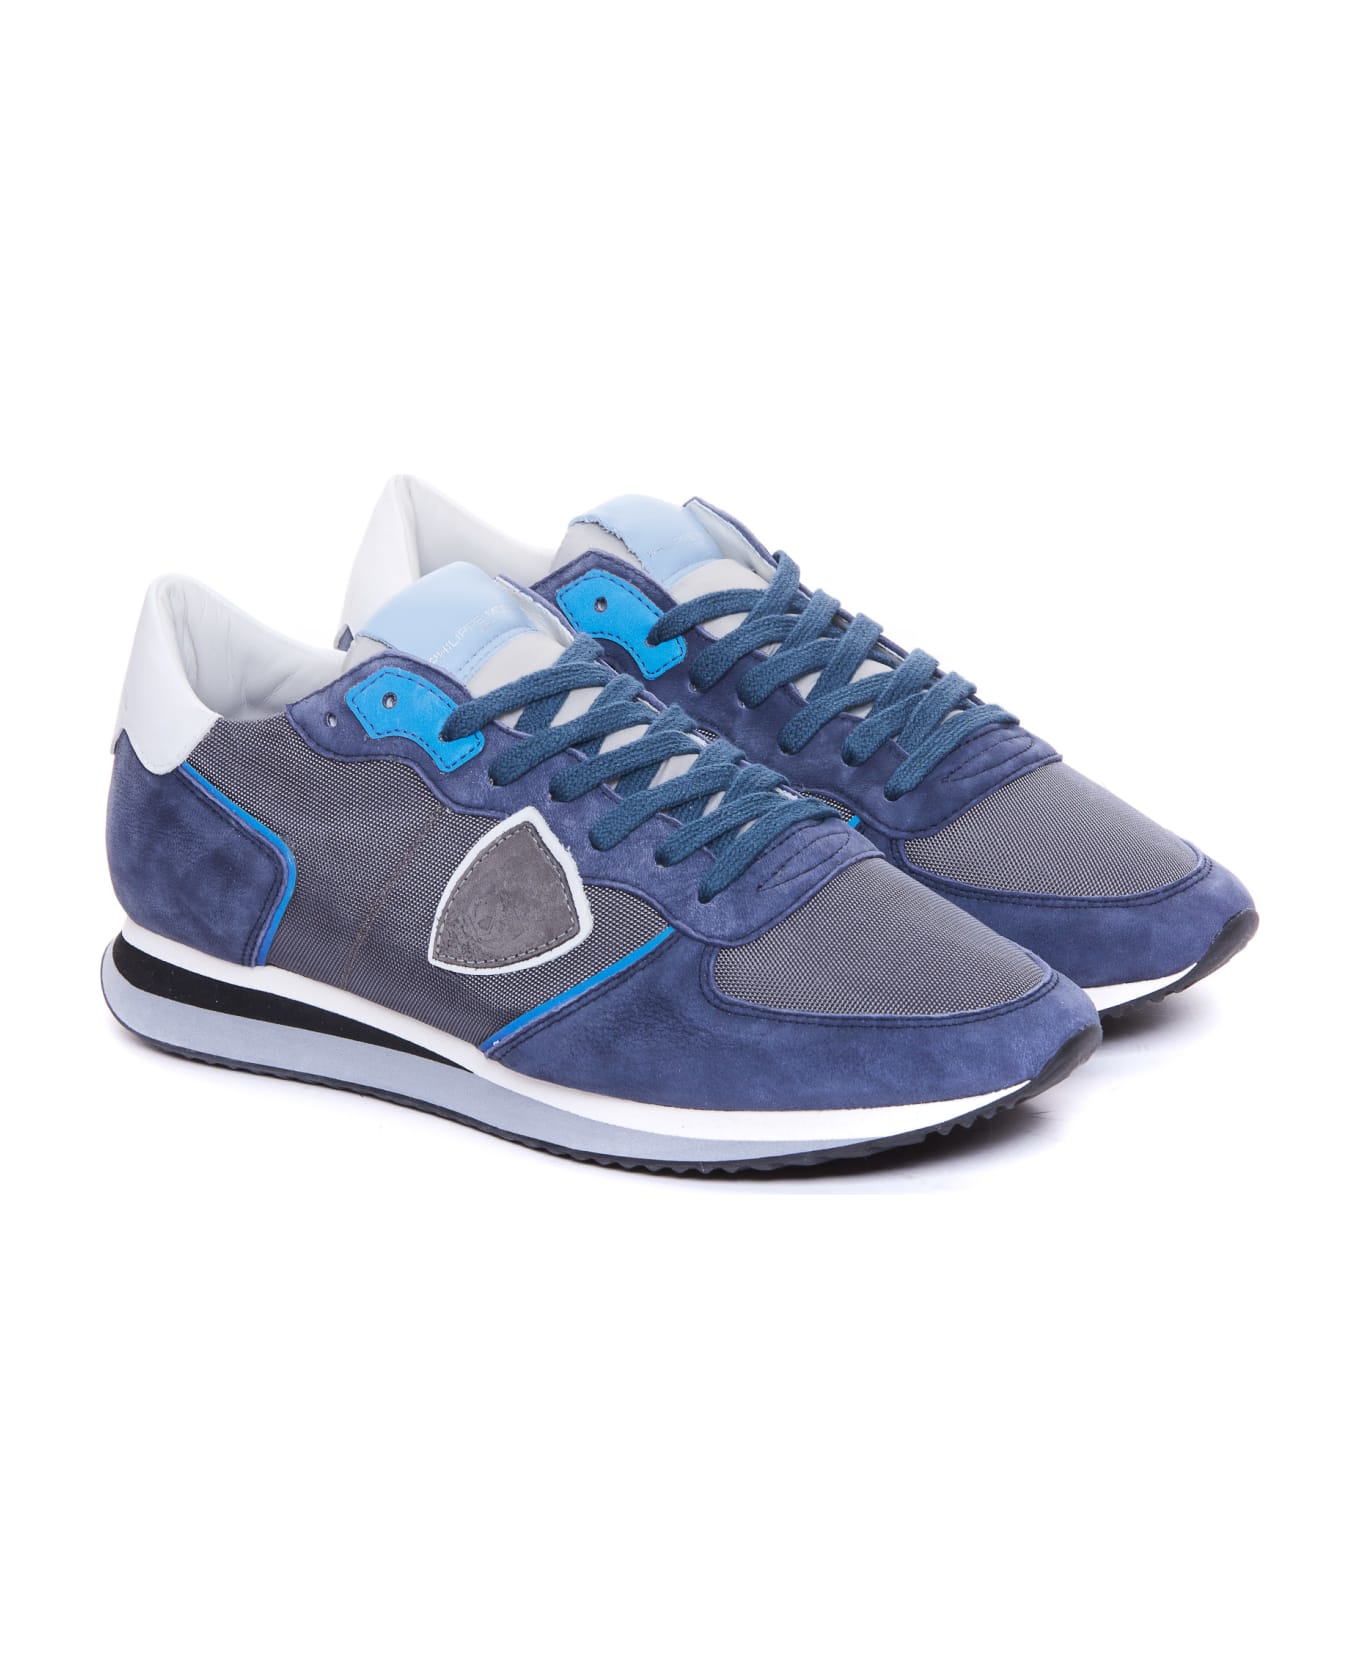 Philippe Model Trpx Sneakers - Blue スニーカー